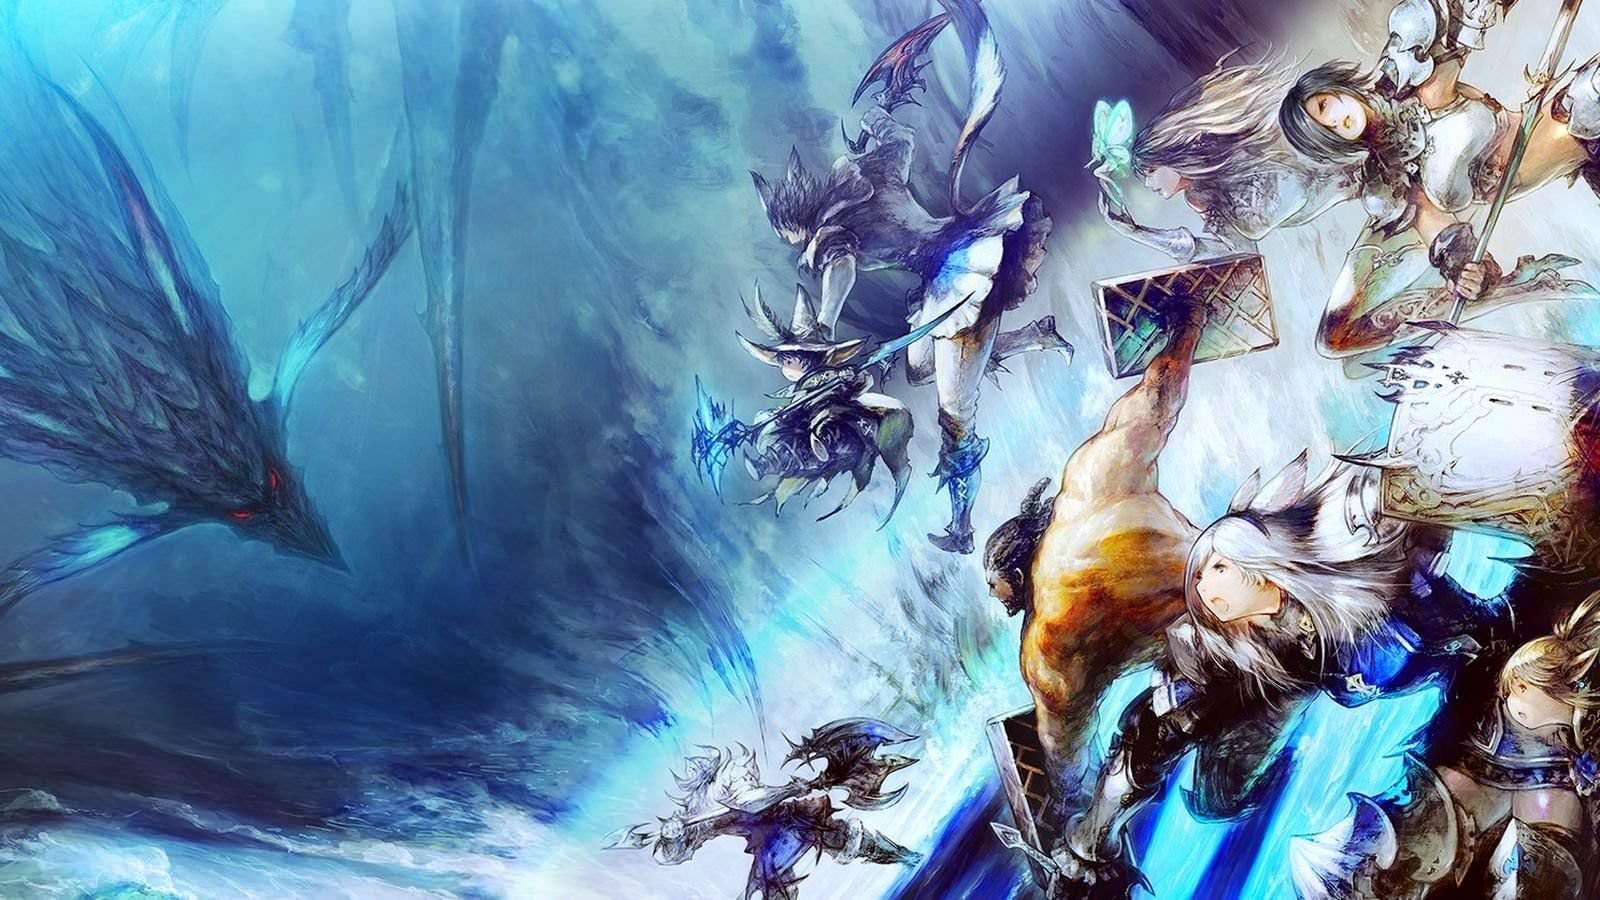 Awesome Final Fantasy XIV (FF14) free wallpaper for HD